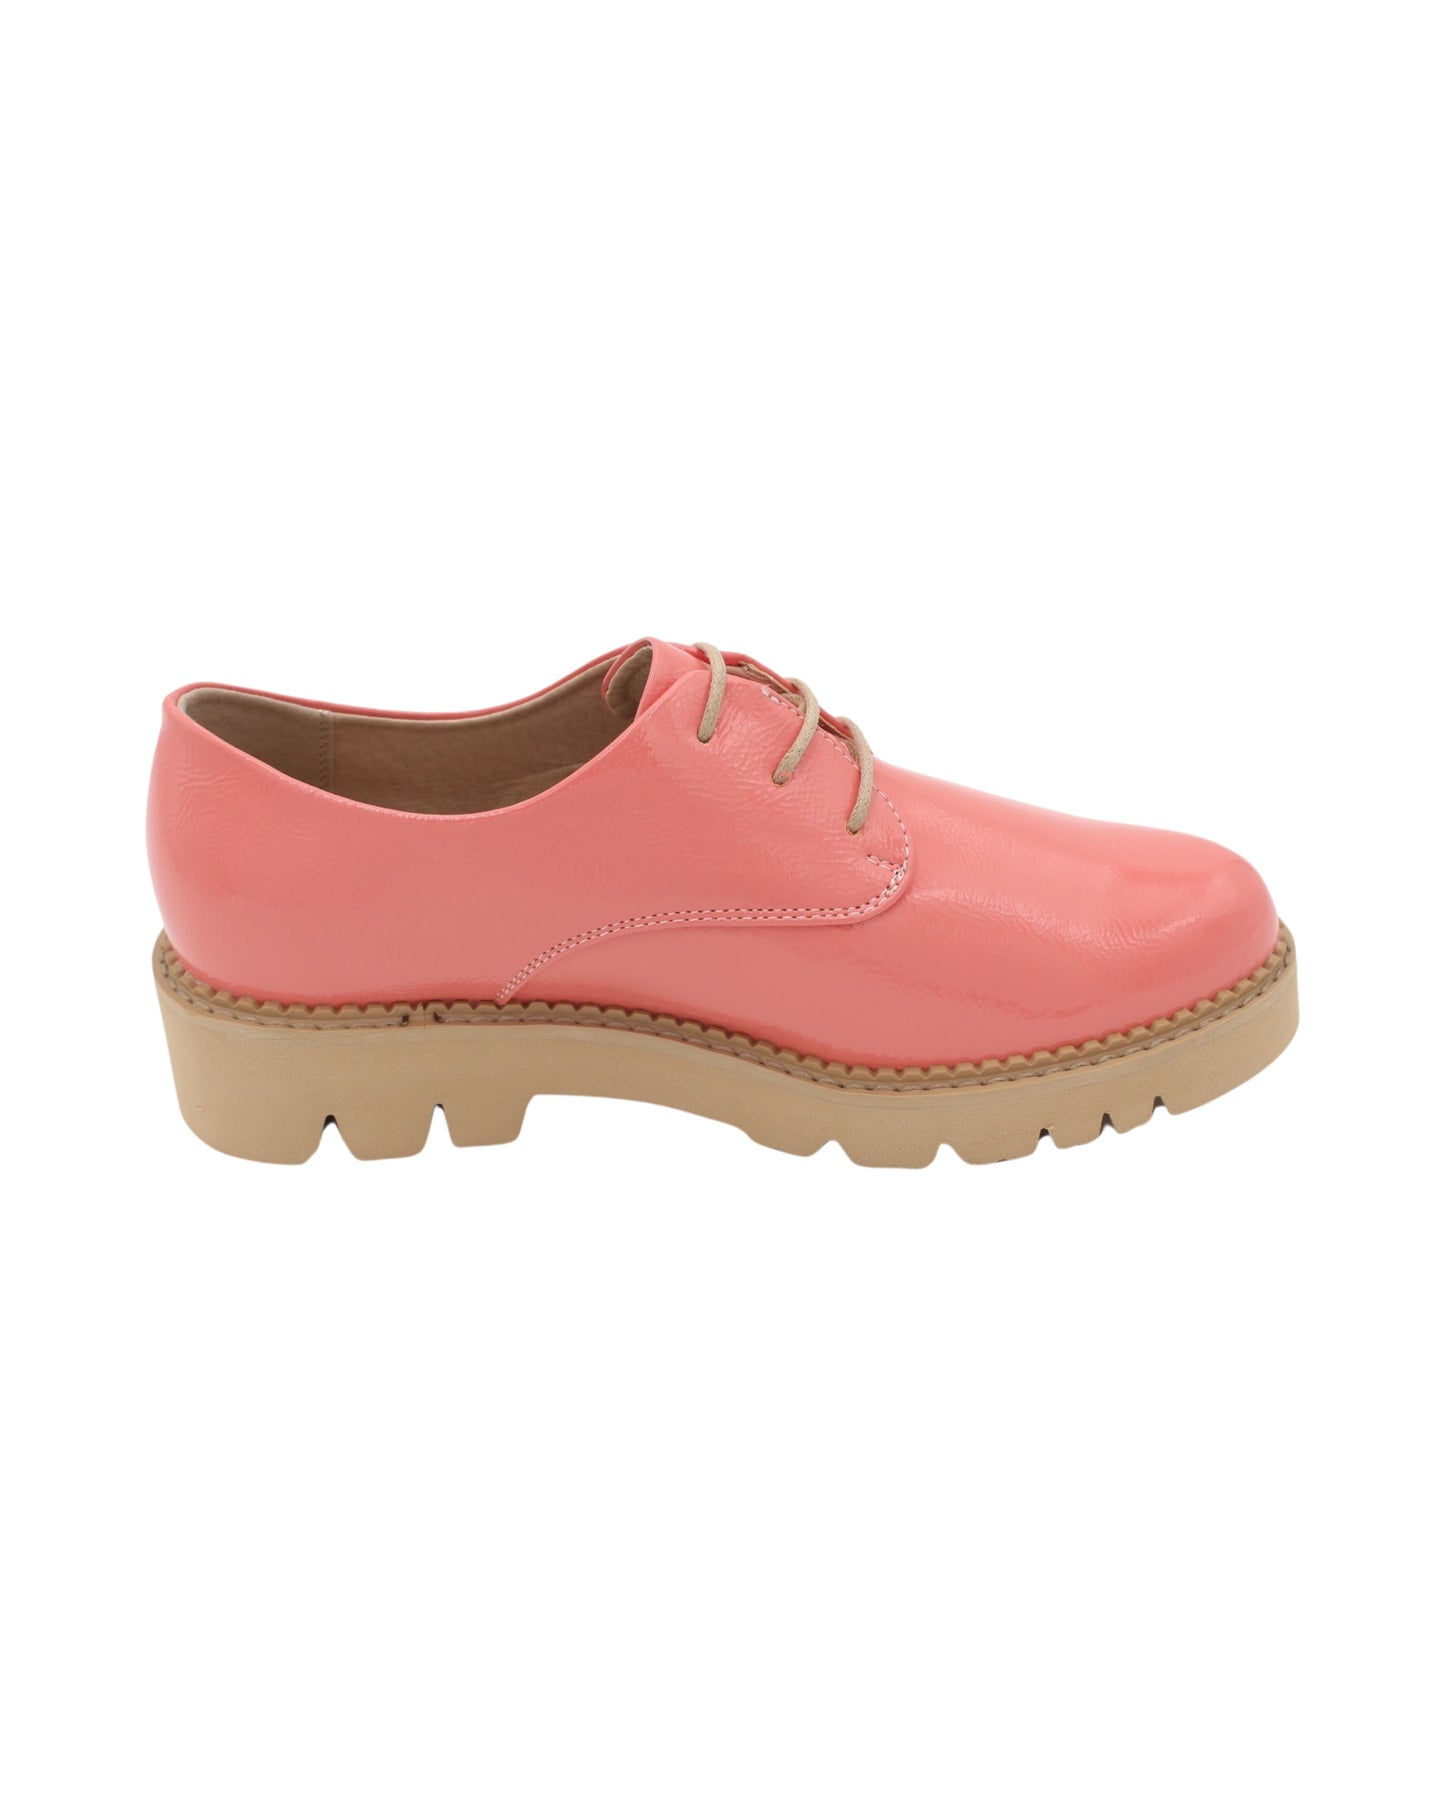 Zanni - Ladies Shoes Brogues Pink (2160)